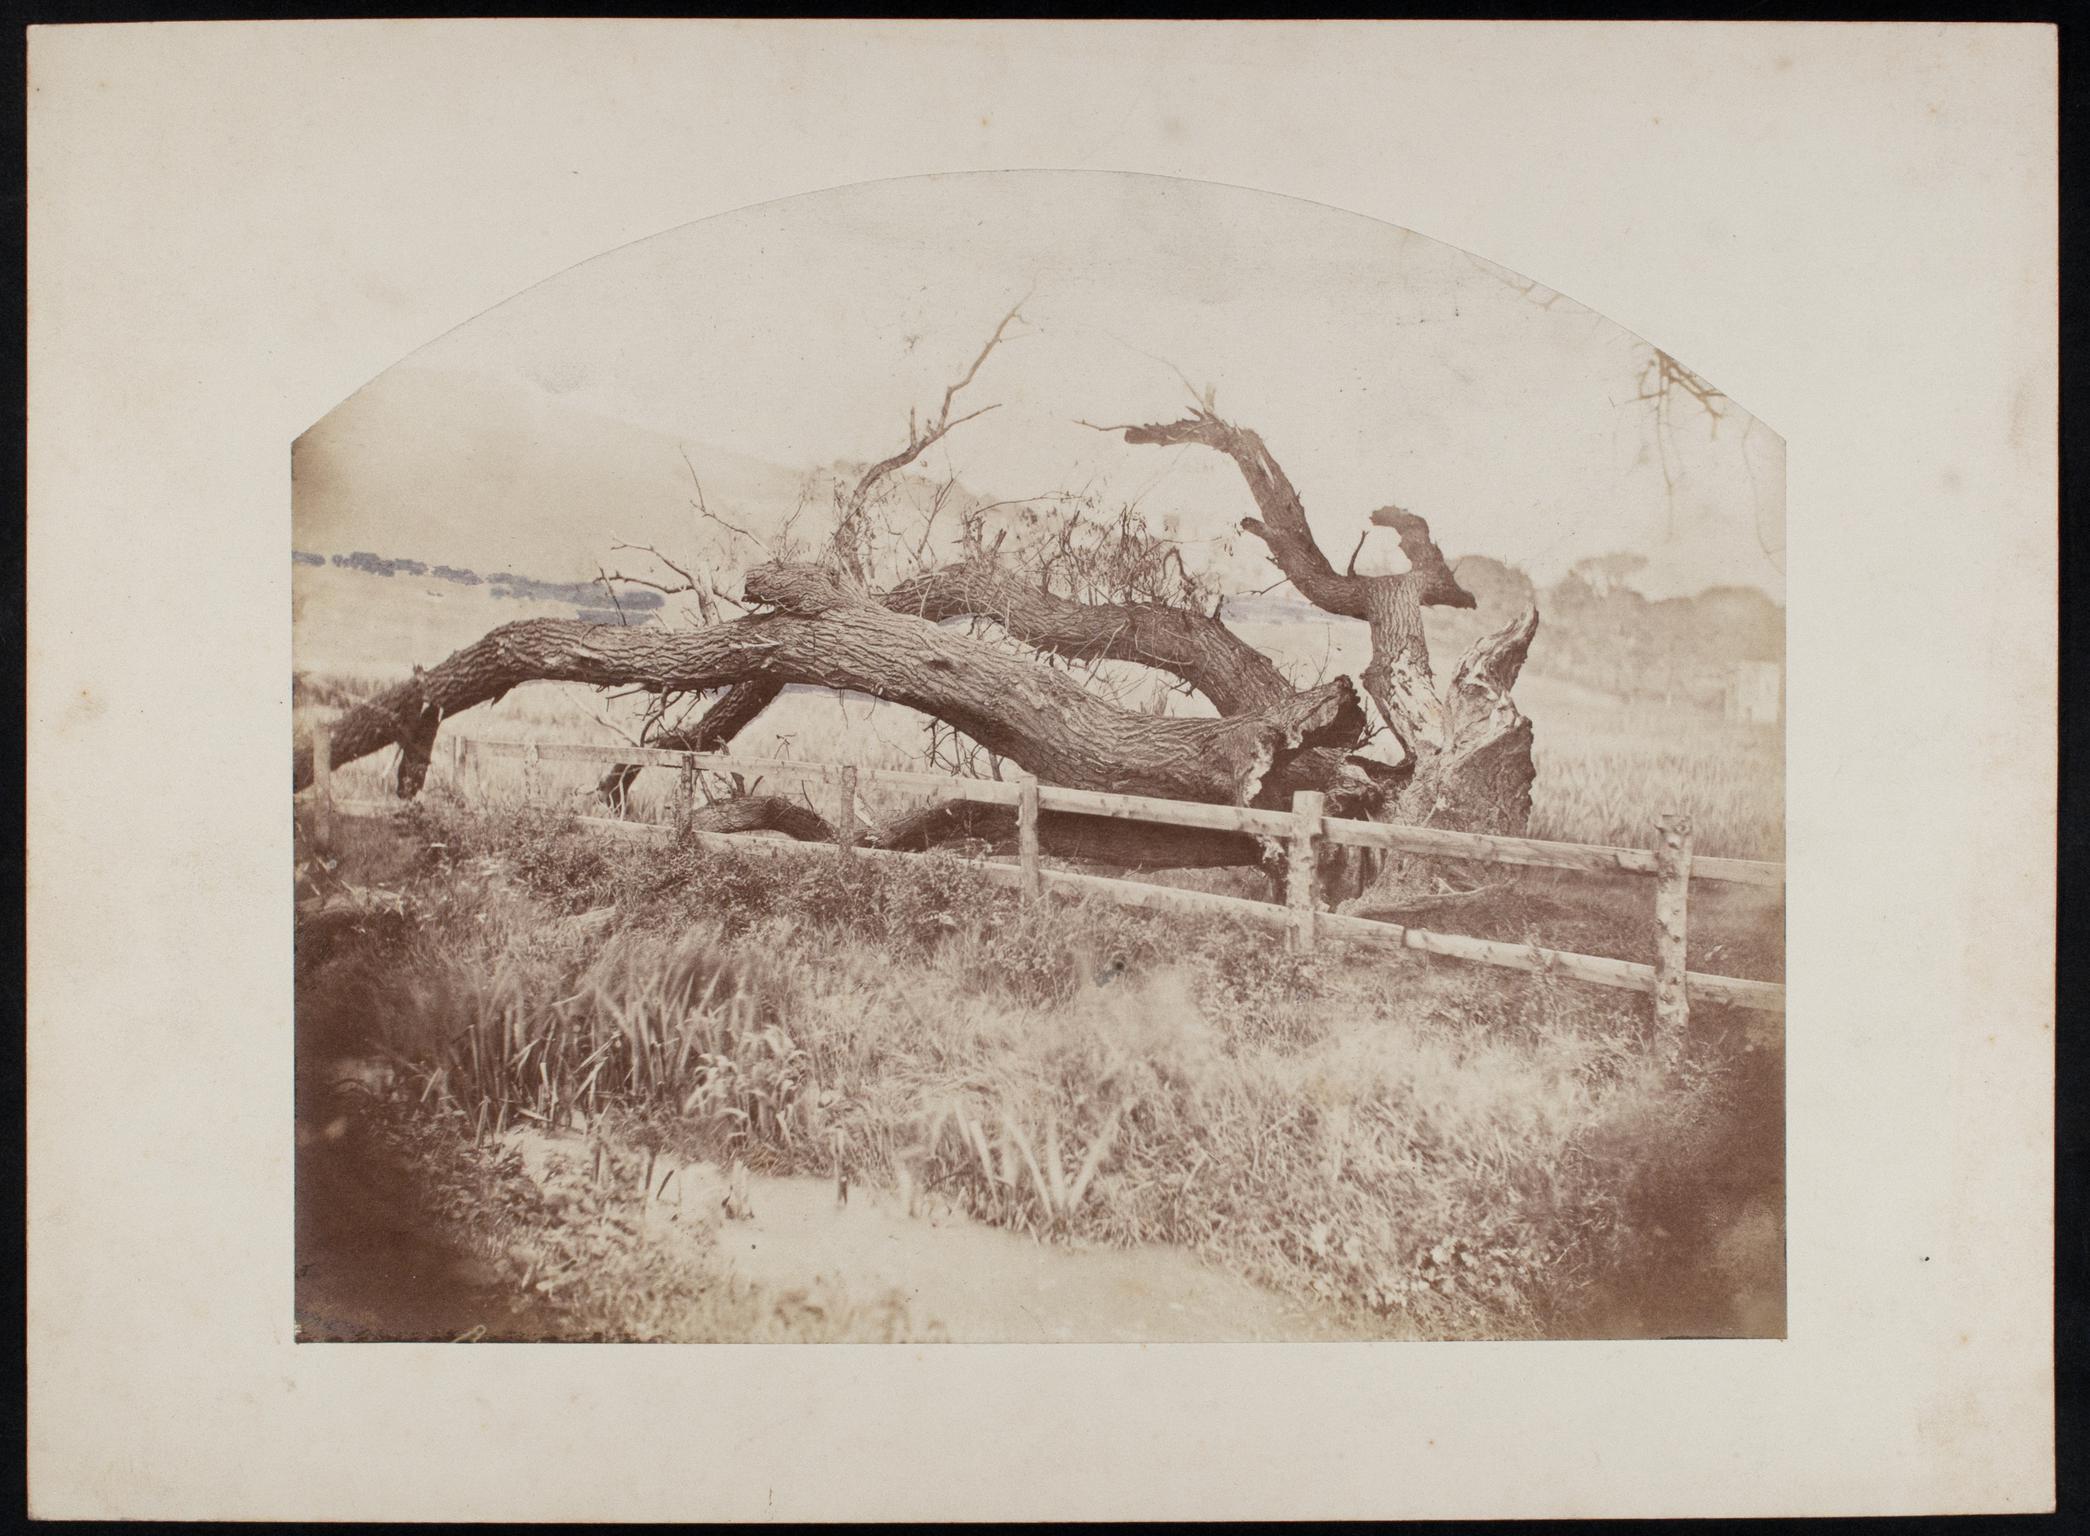 Fallen tree, photograph